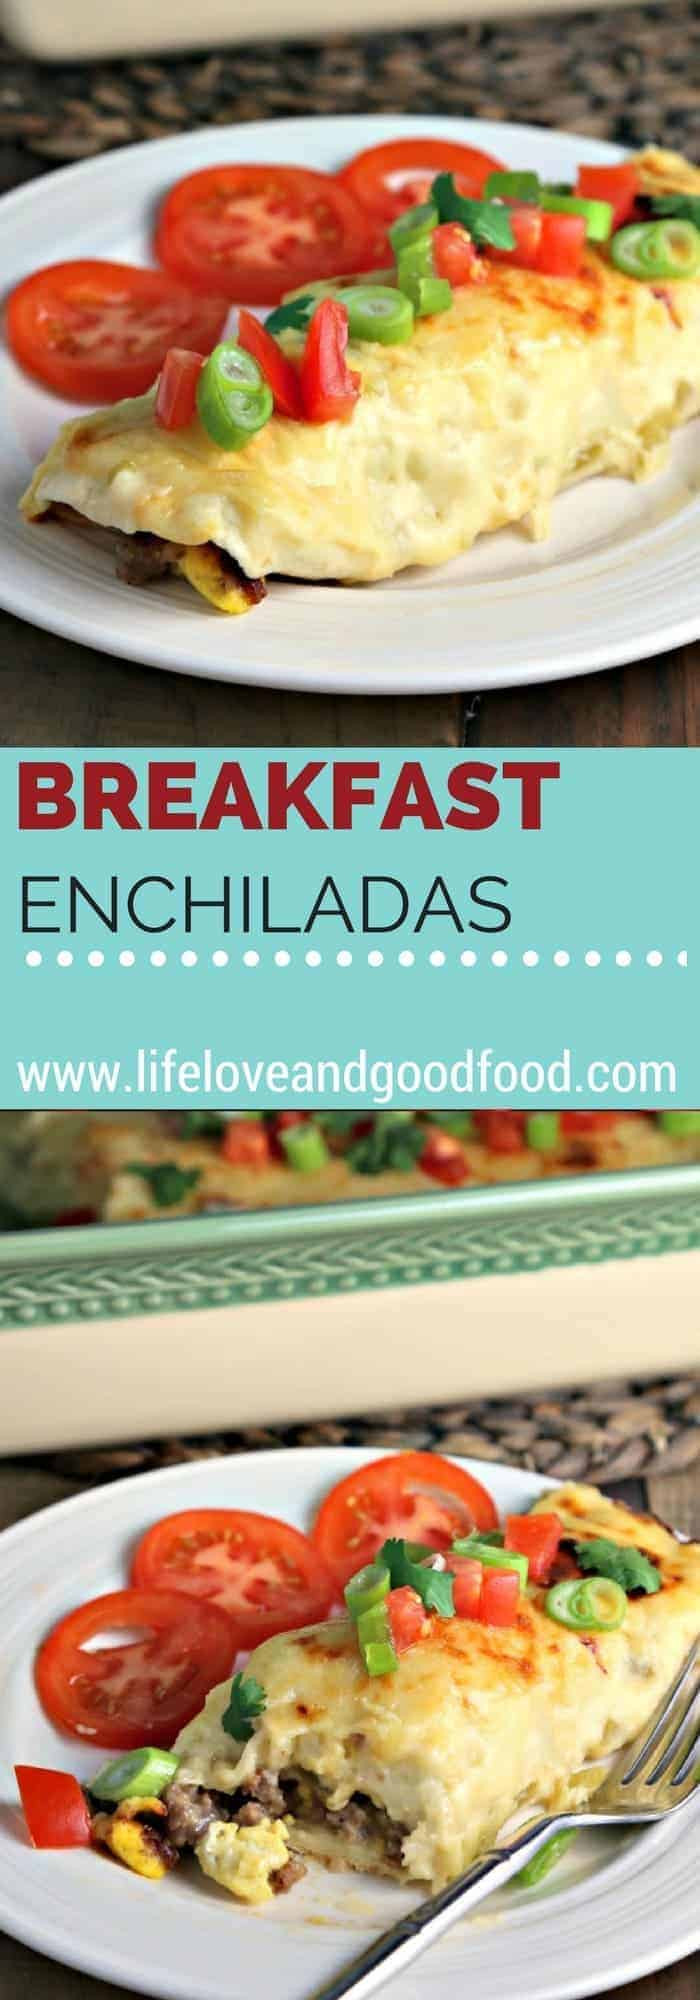 Southern Living Breakfast Enchiladas
 Breakfast Enchiladas Life Love and Good Food